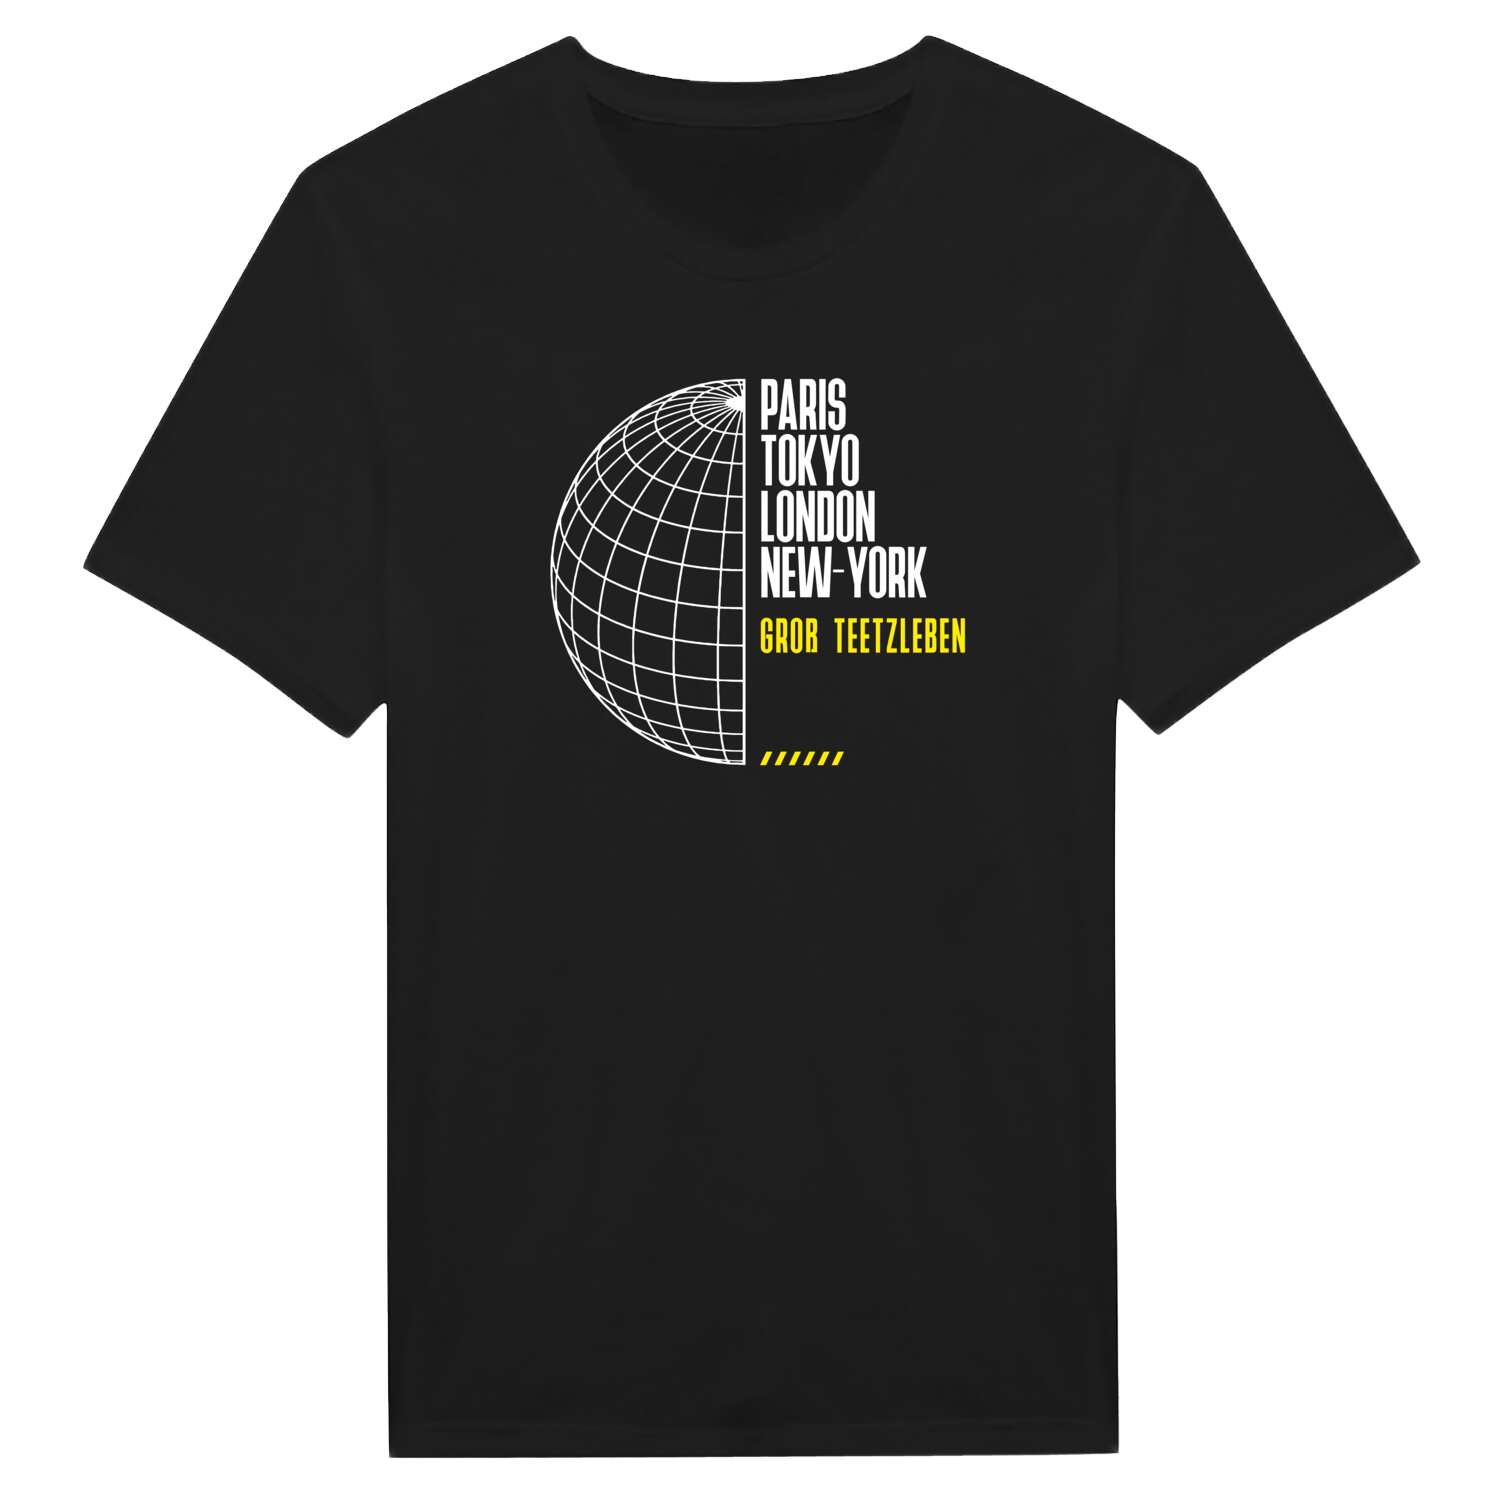 Groß Teetzleben T-Shirt »Paris Tokyo London«